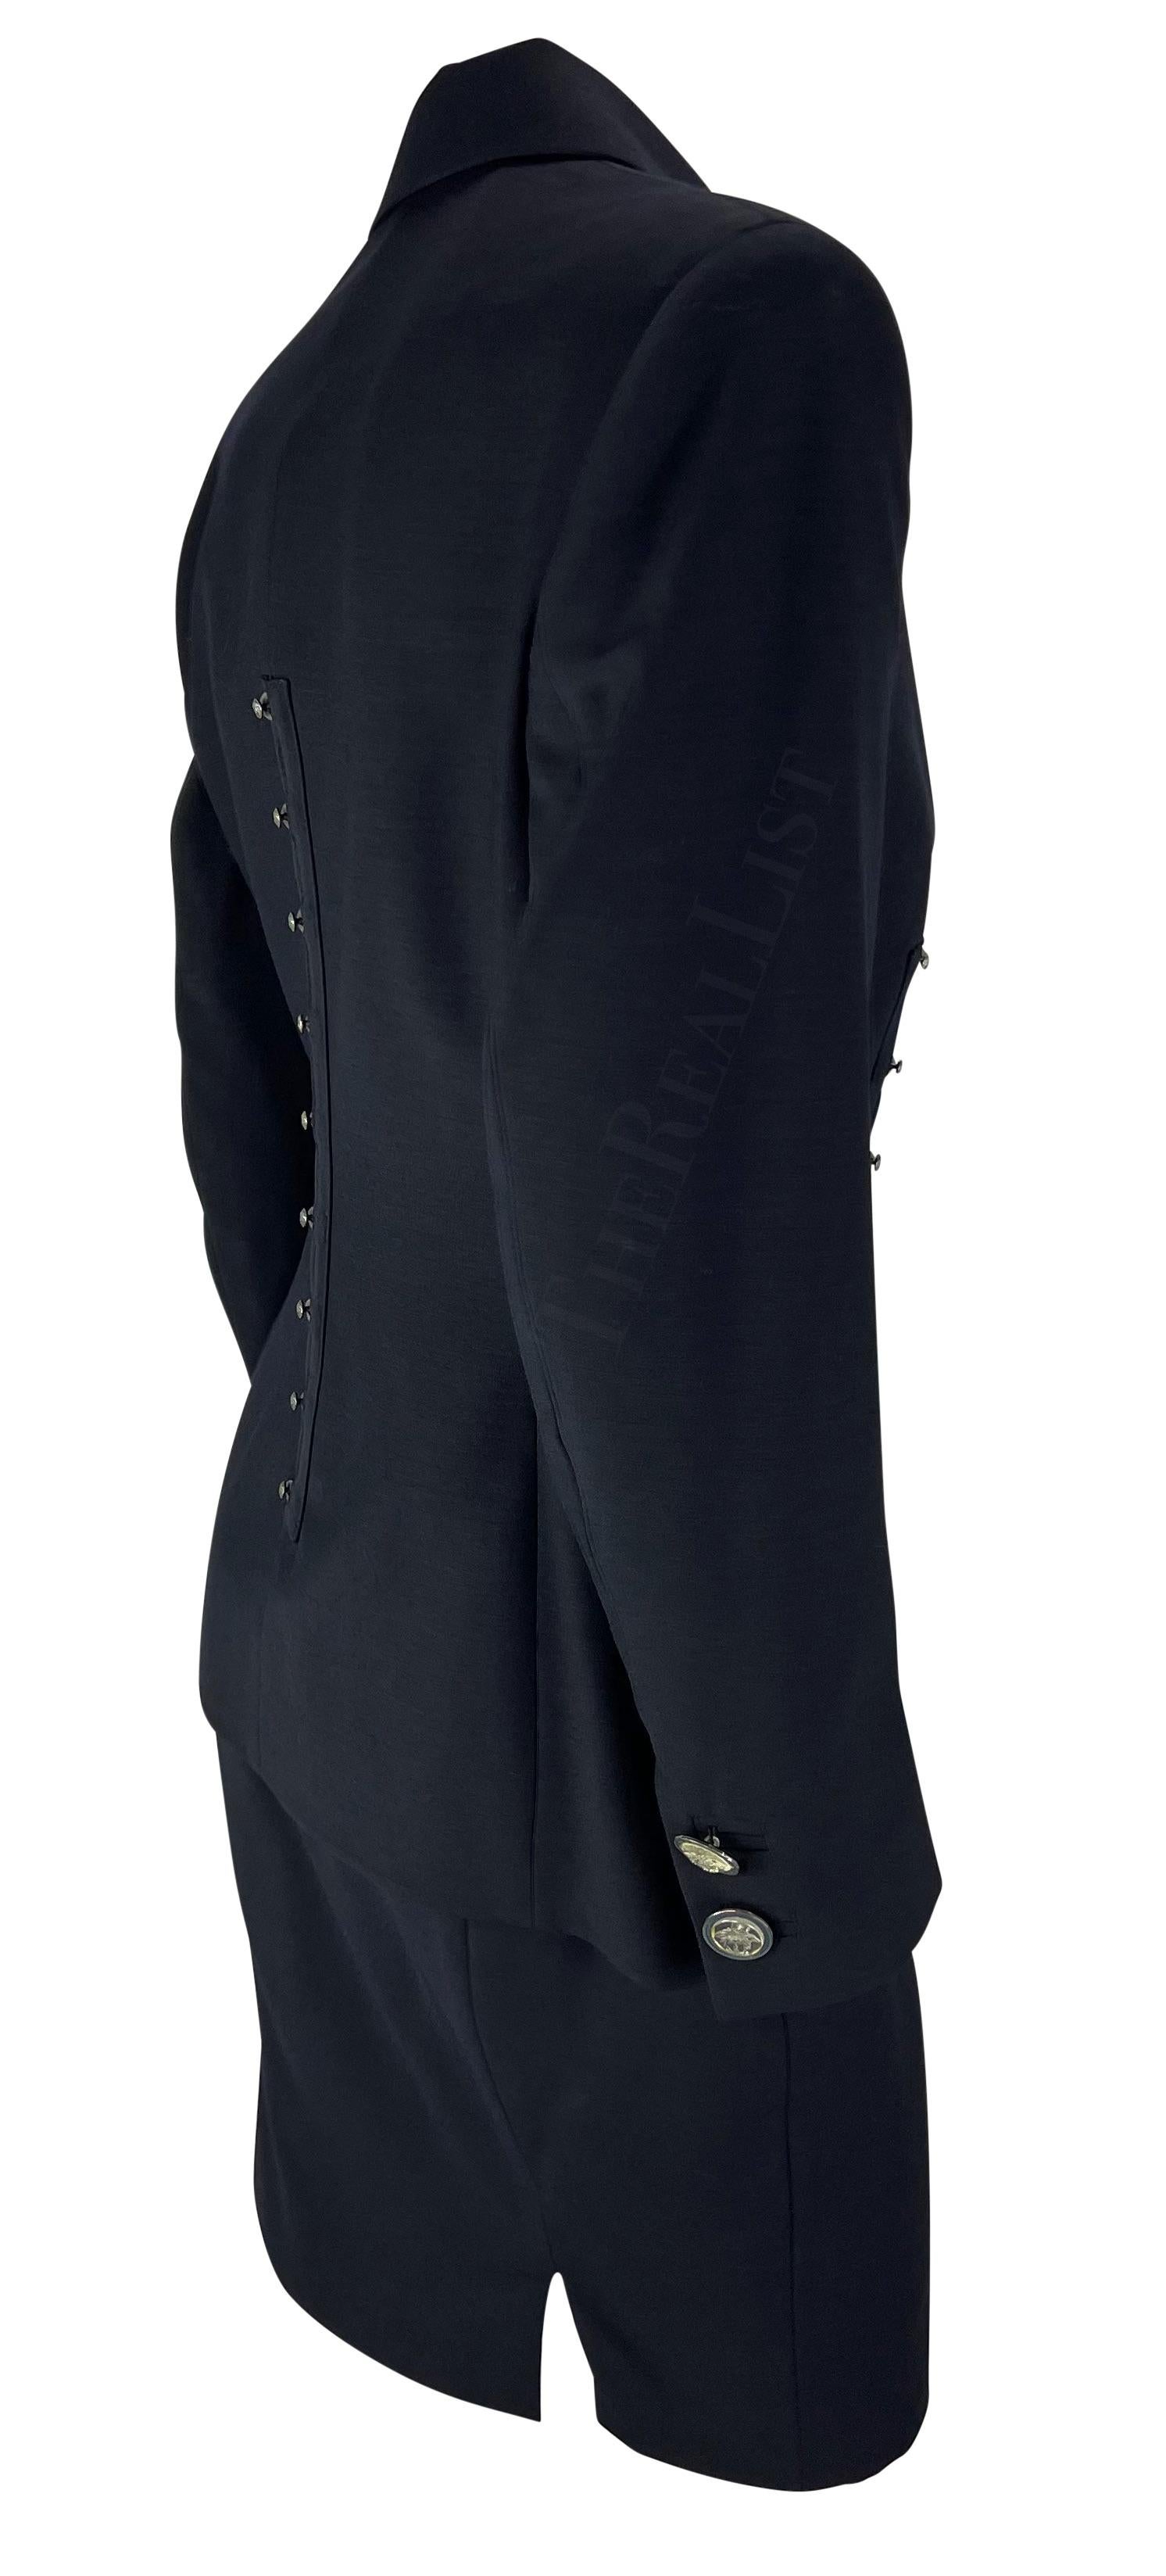 S/S 1995 Gianni Versace Couture Runway Corset Boned Medusa Black Skirt Suit For Sale 6